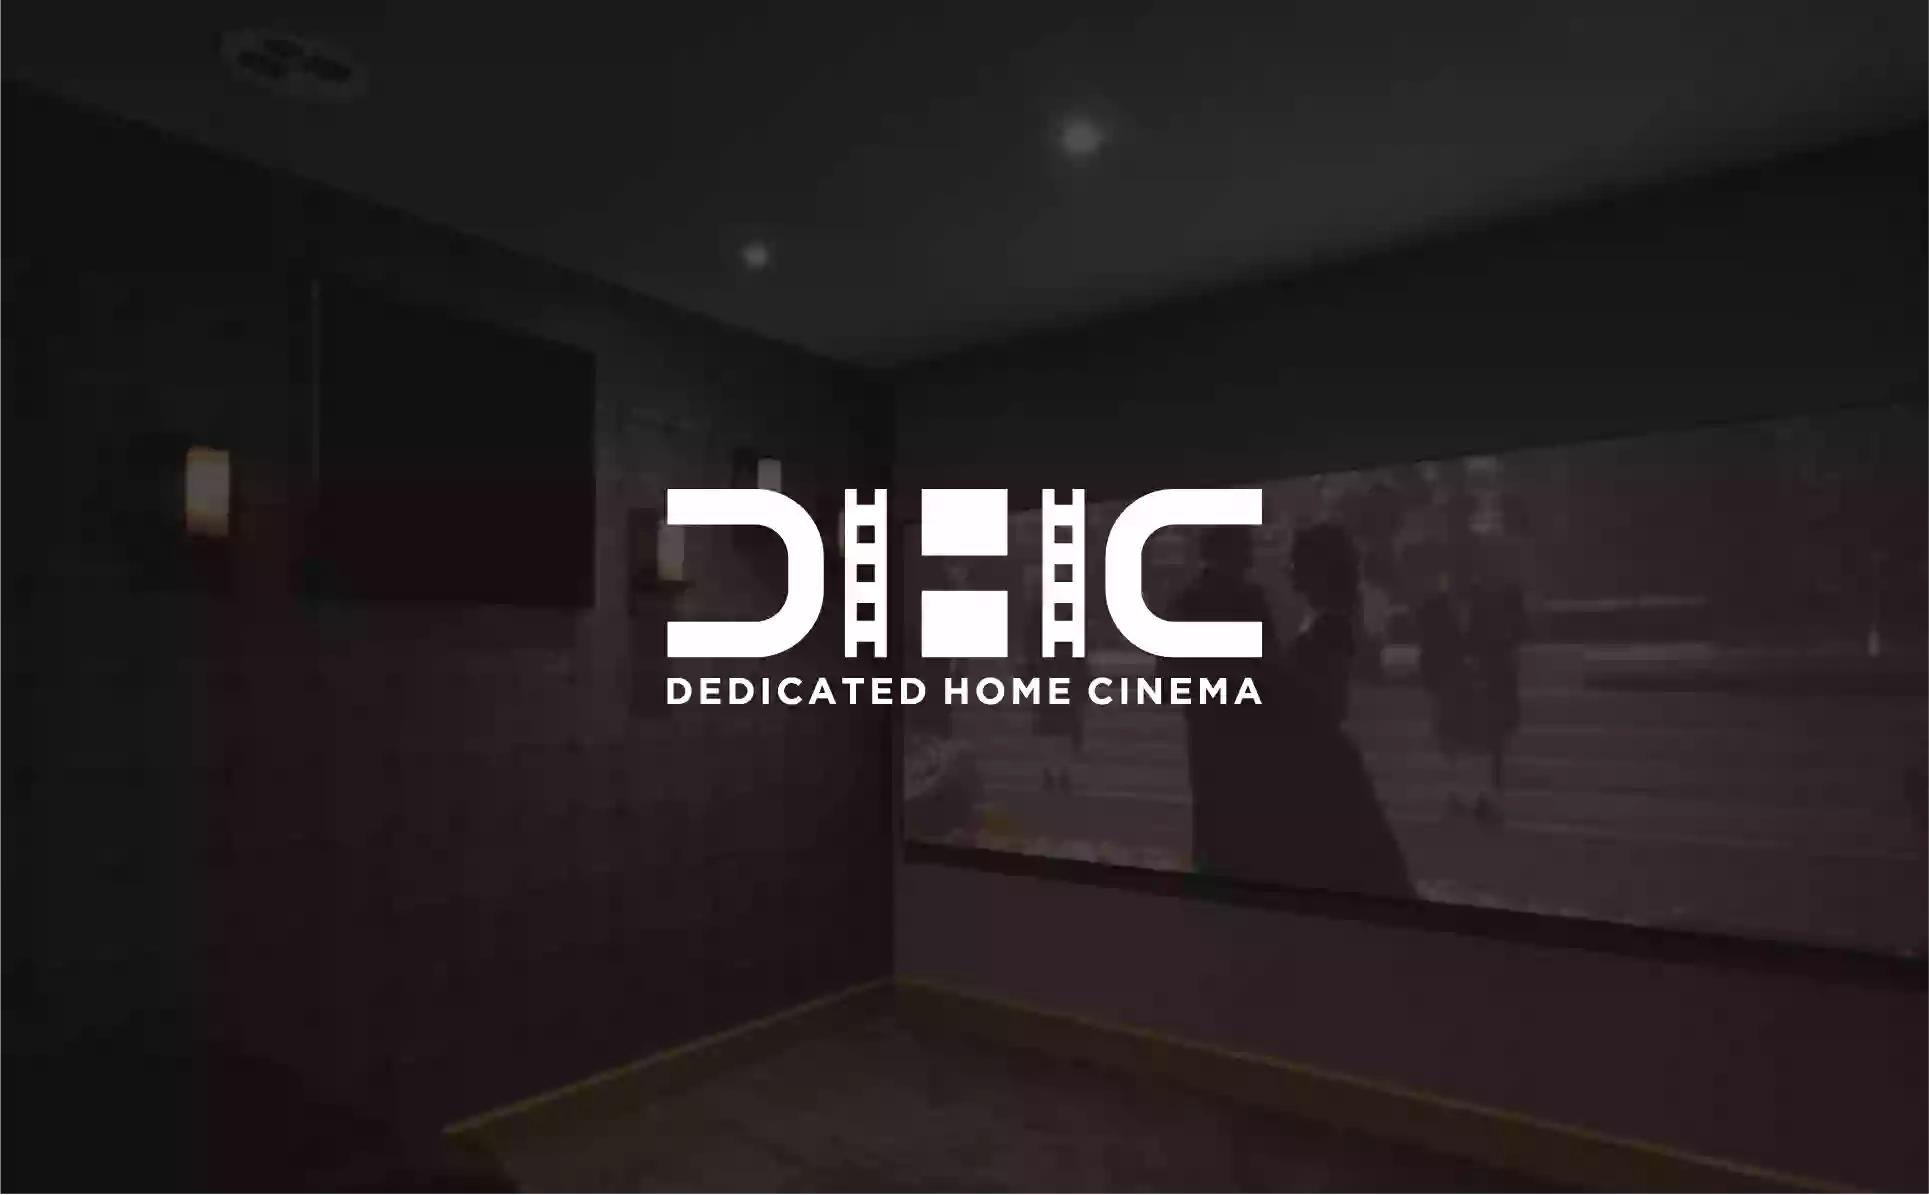 Dedicated Home Cinema Limited